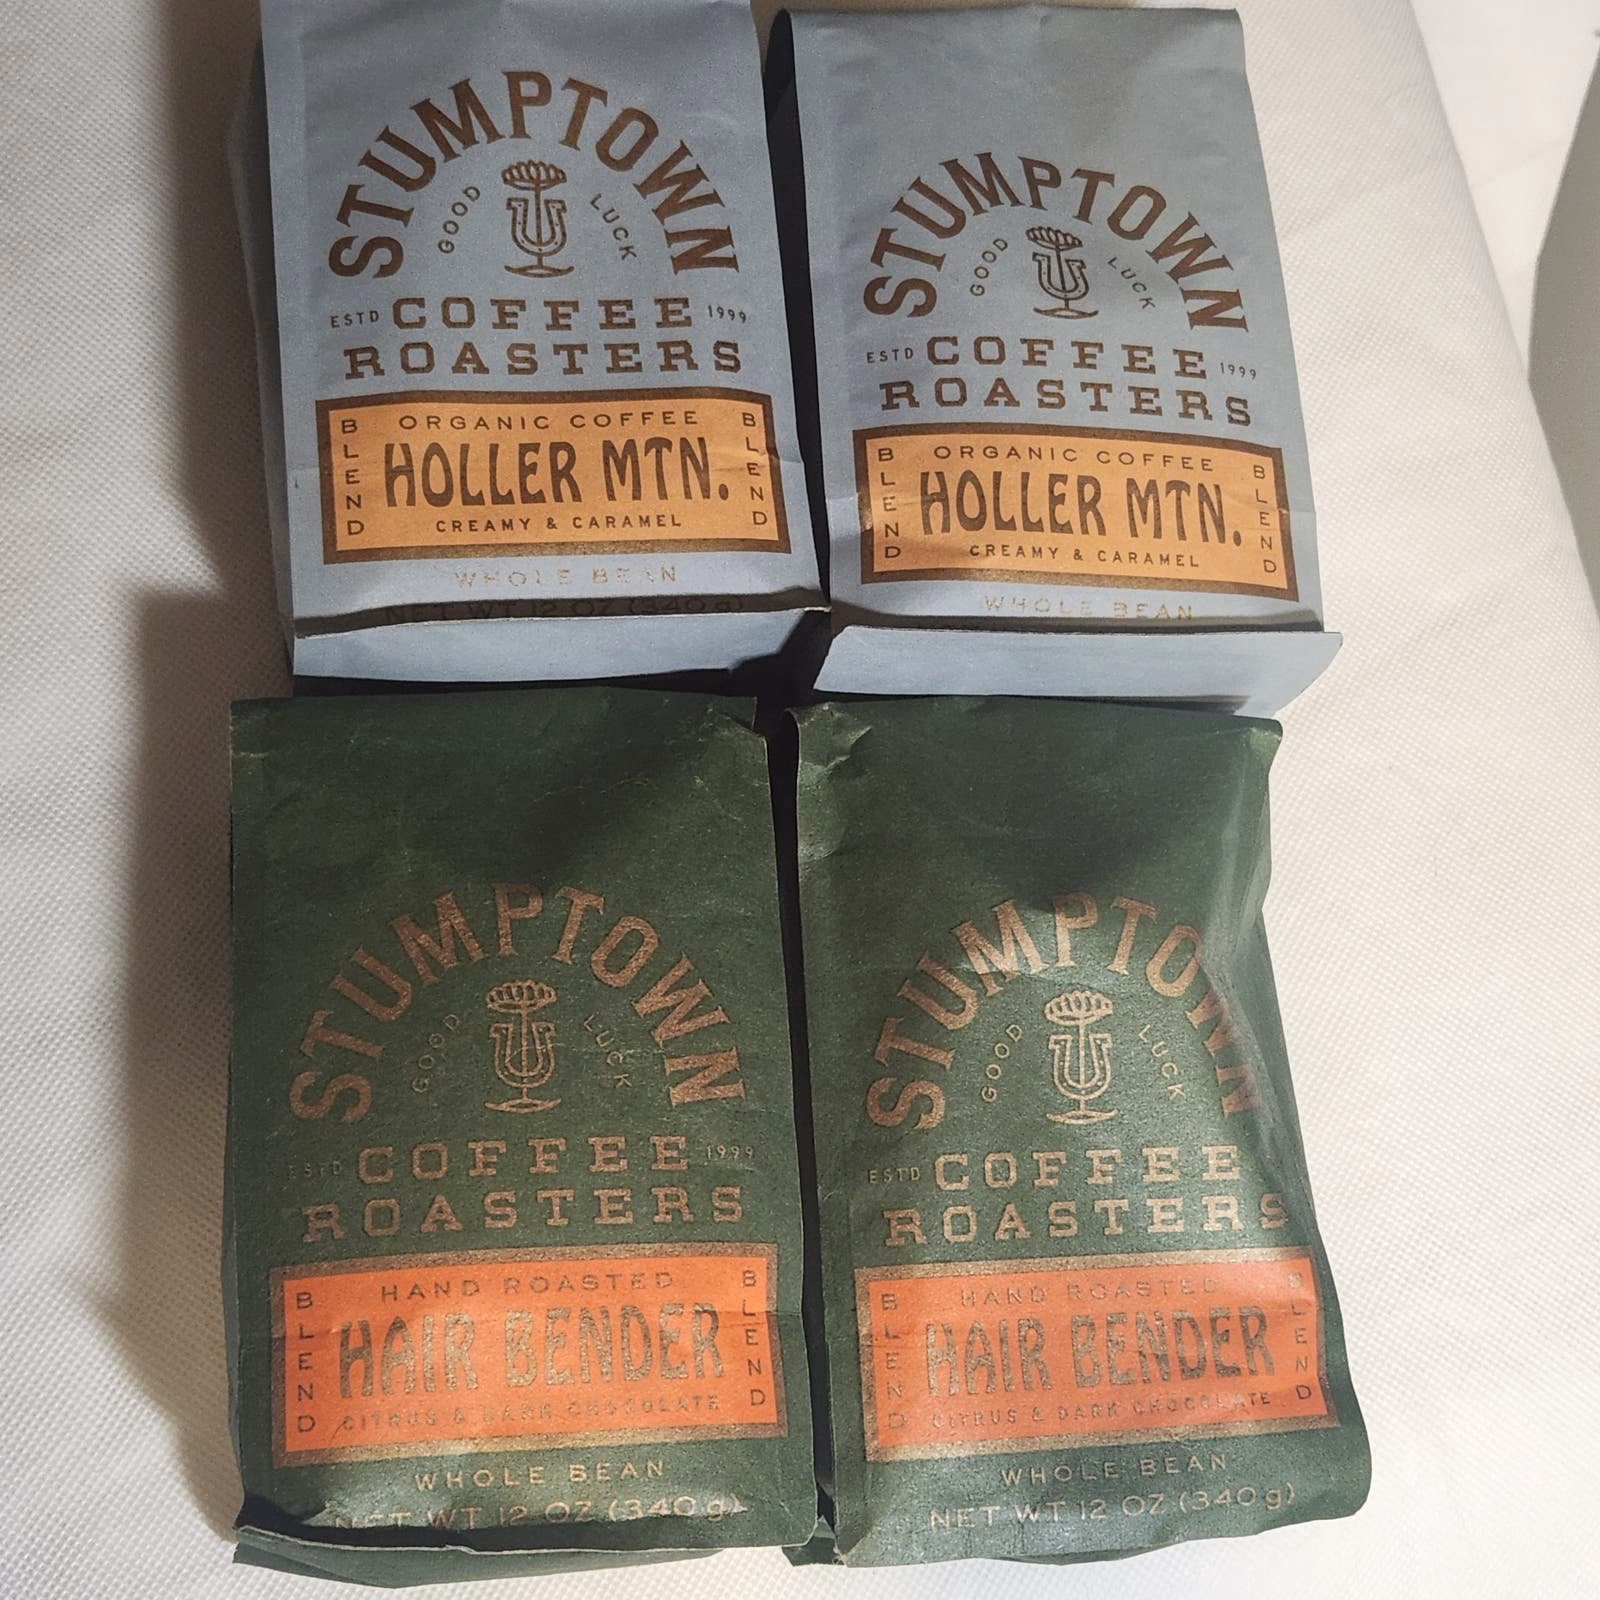 Stumptown Coffee Beans Hair Bender 2 Bags & Holler Mountain 2 Bags(12 oz * 4) jcSLWrh1I